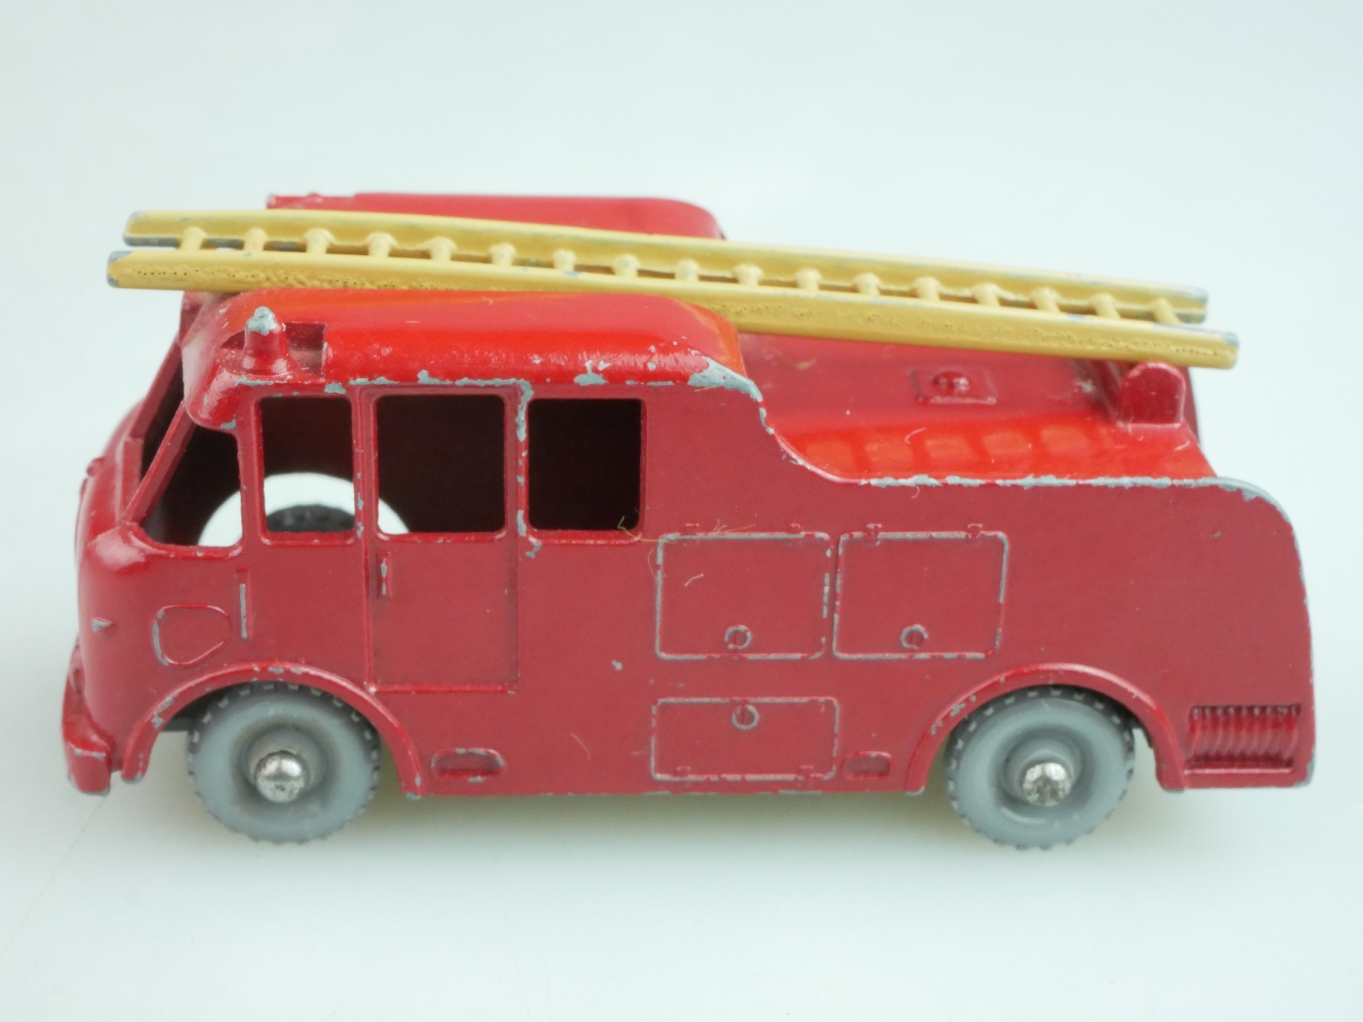 09c Merryweather Fire Engine - 37900